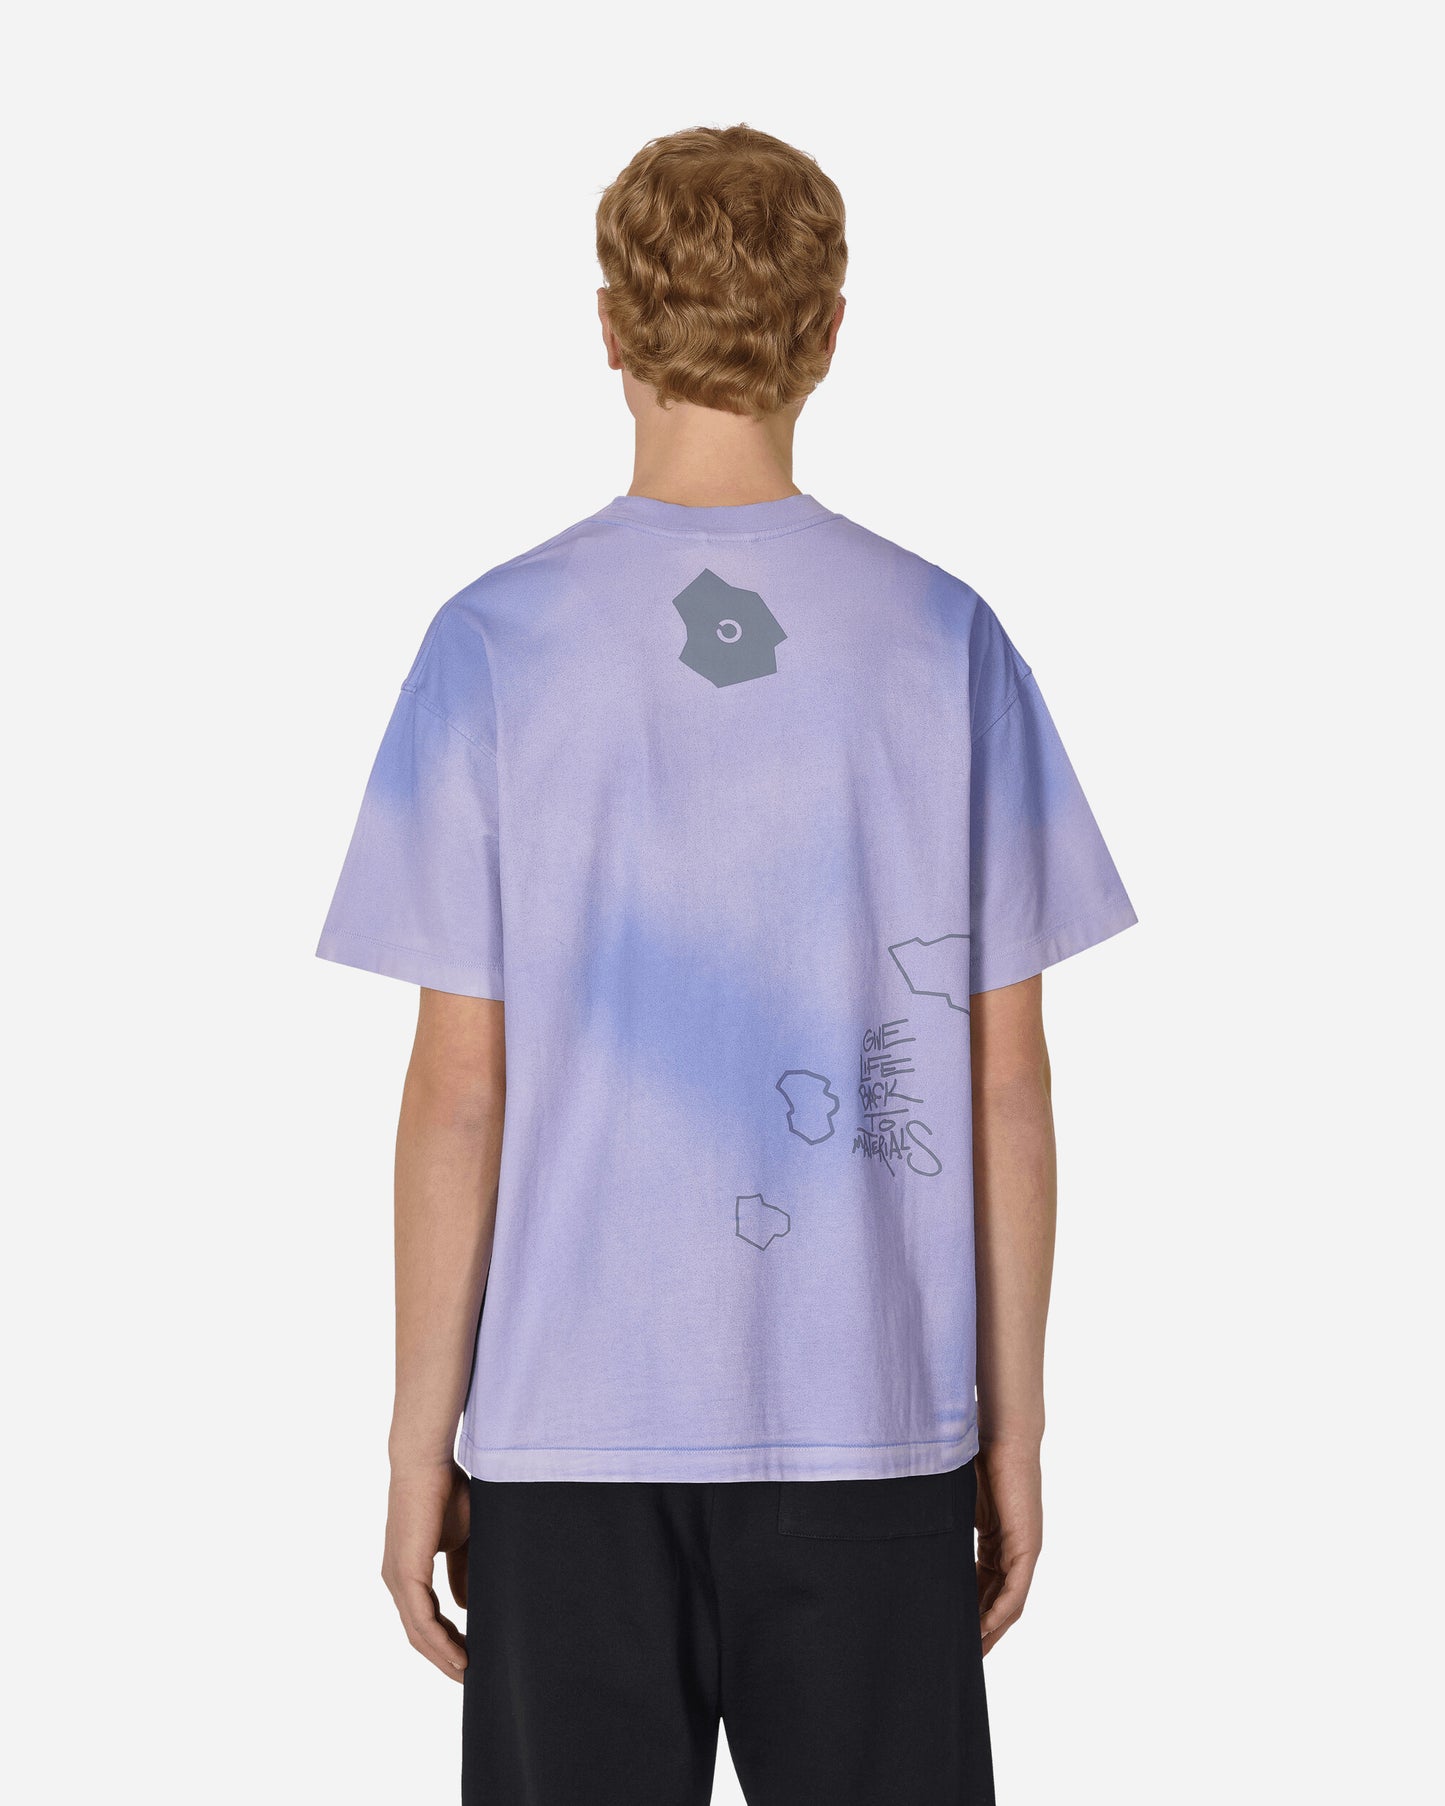 Objects IV Life Patina Tee Lilac Fade T-Shirts Shortsleeve 002-116-23  LILFAD 